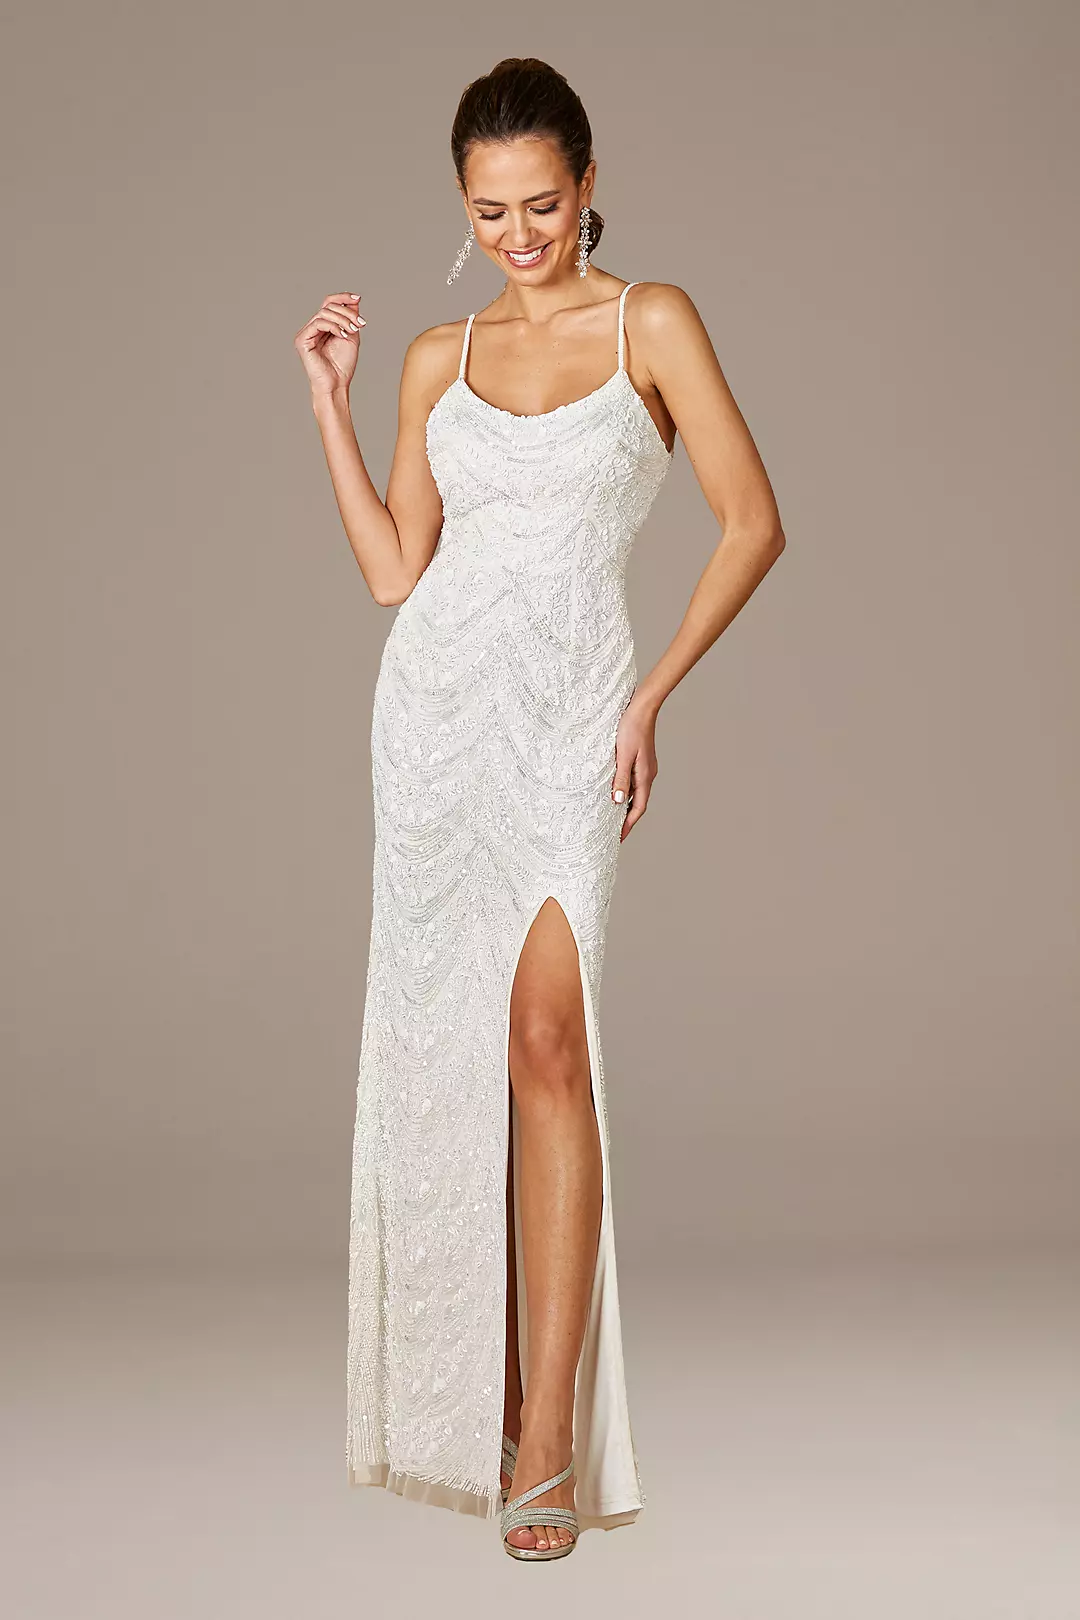 Lara Frenchie Spaghetti Strap Beaded Wedding Gown Image